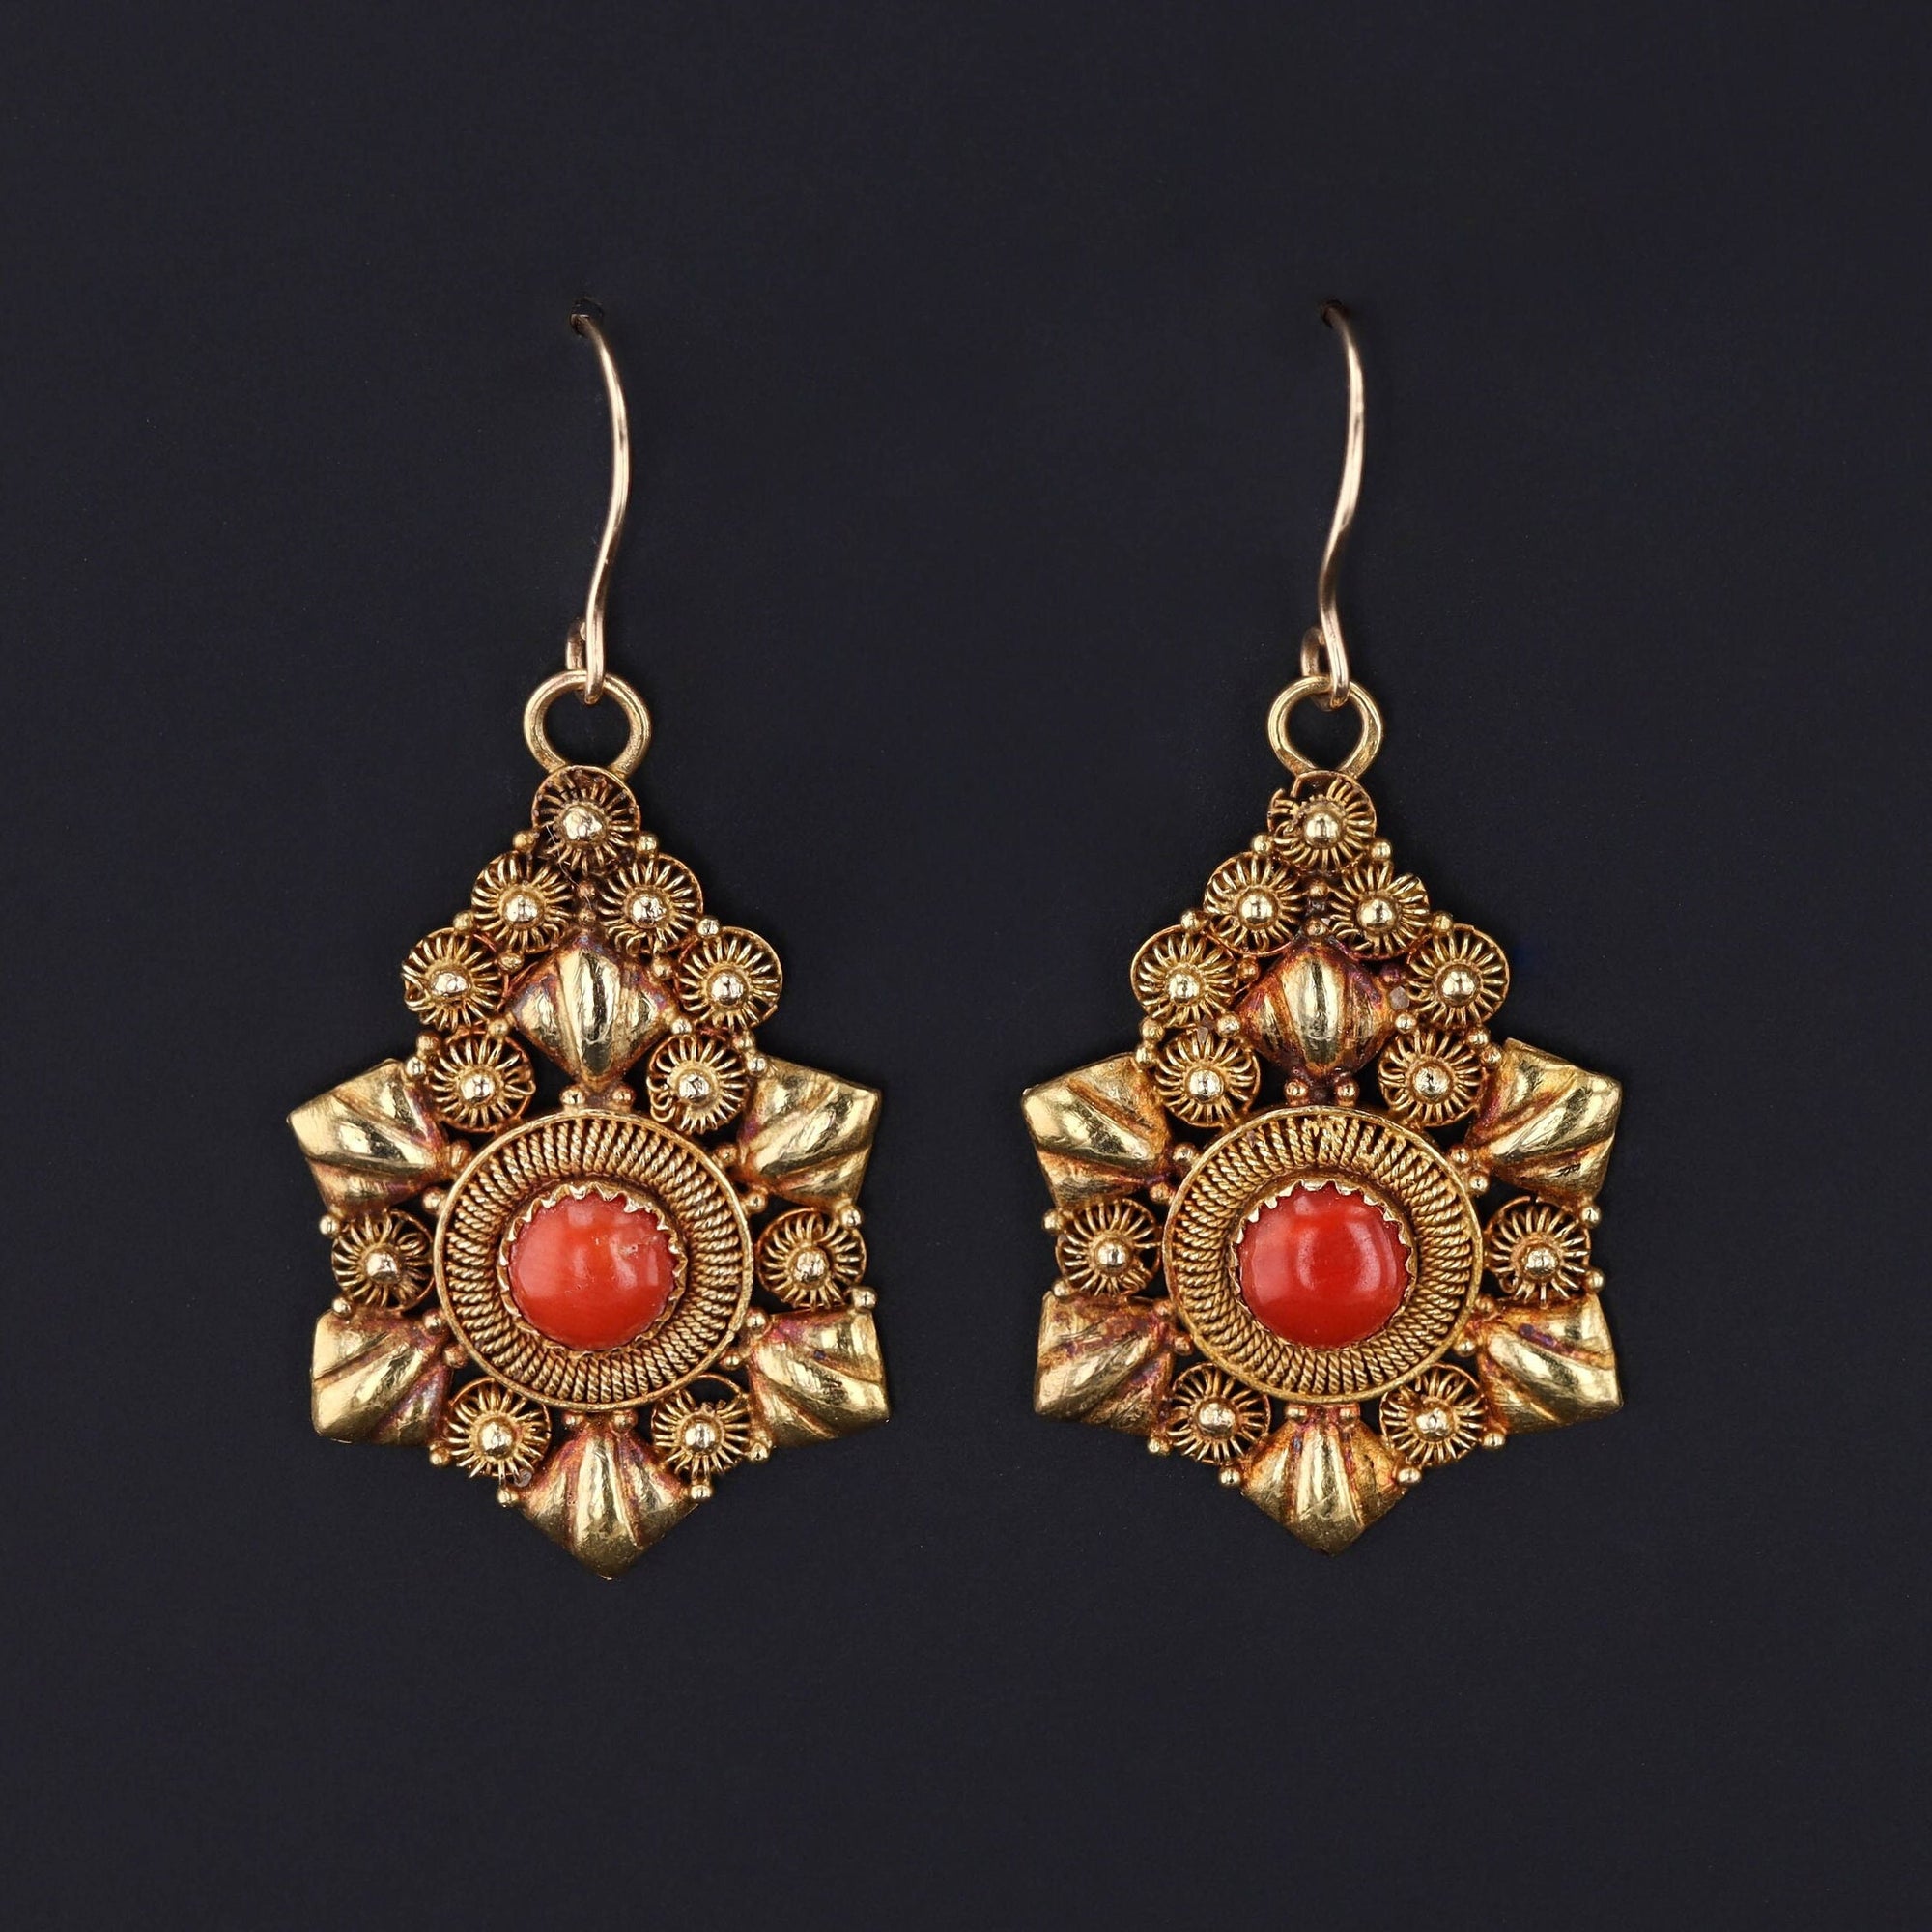 Antique Coral Earrings | 18k Gold Earrings 